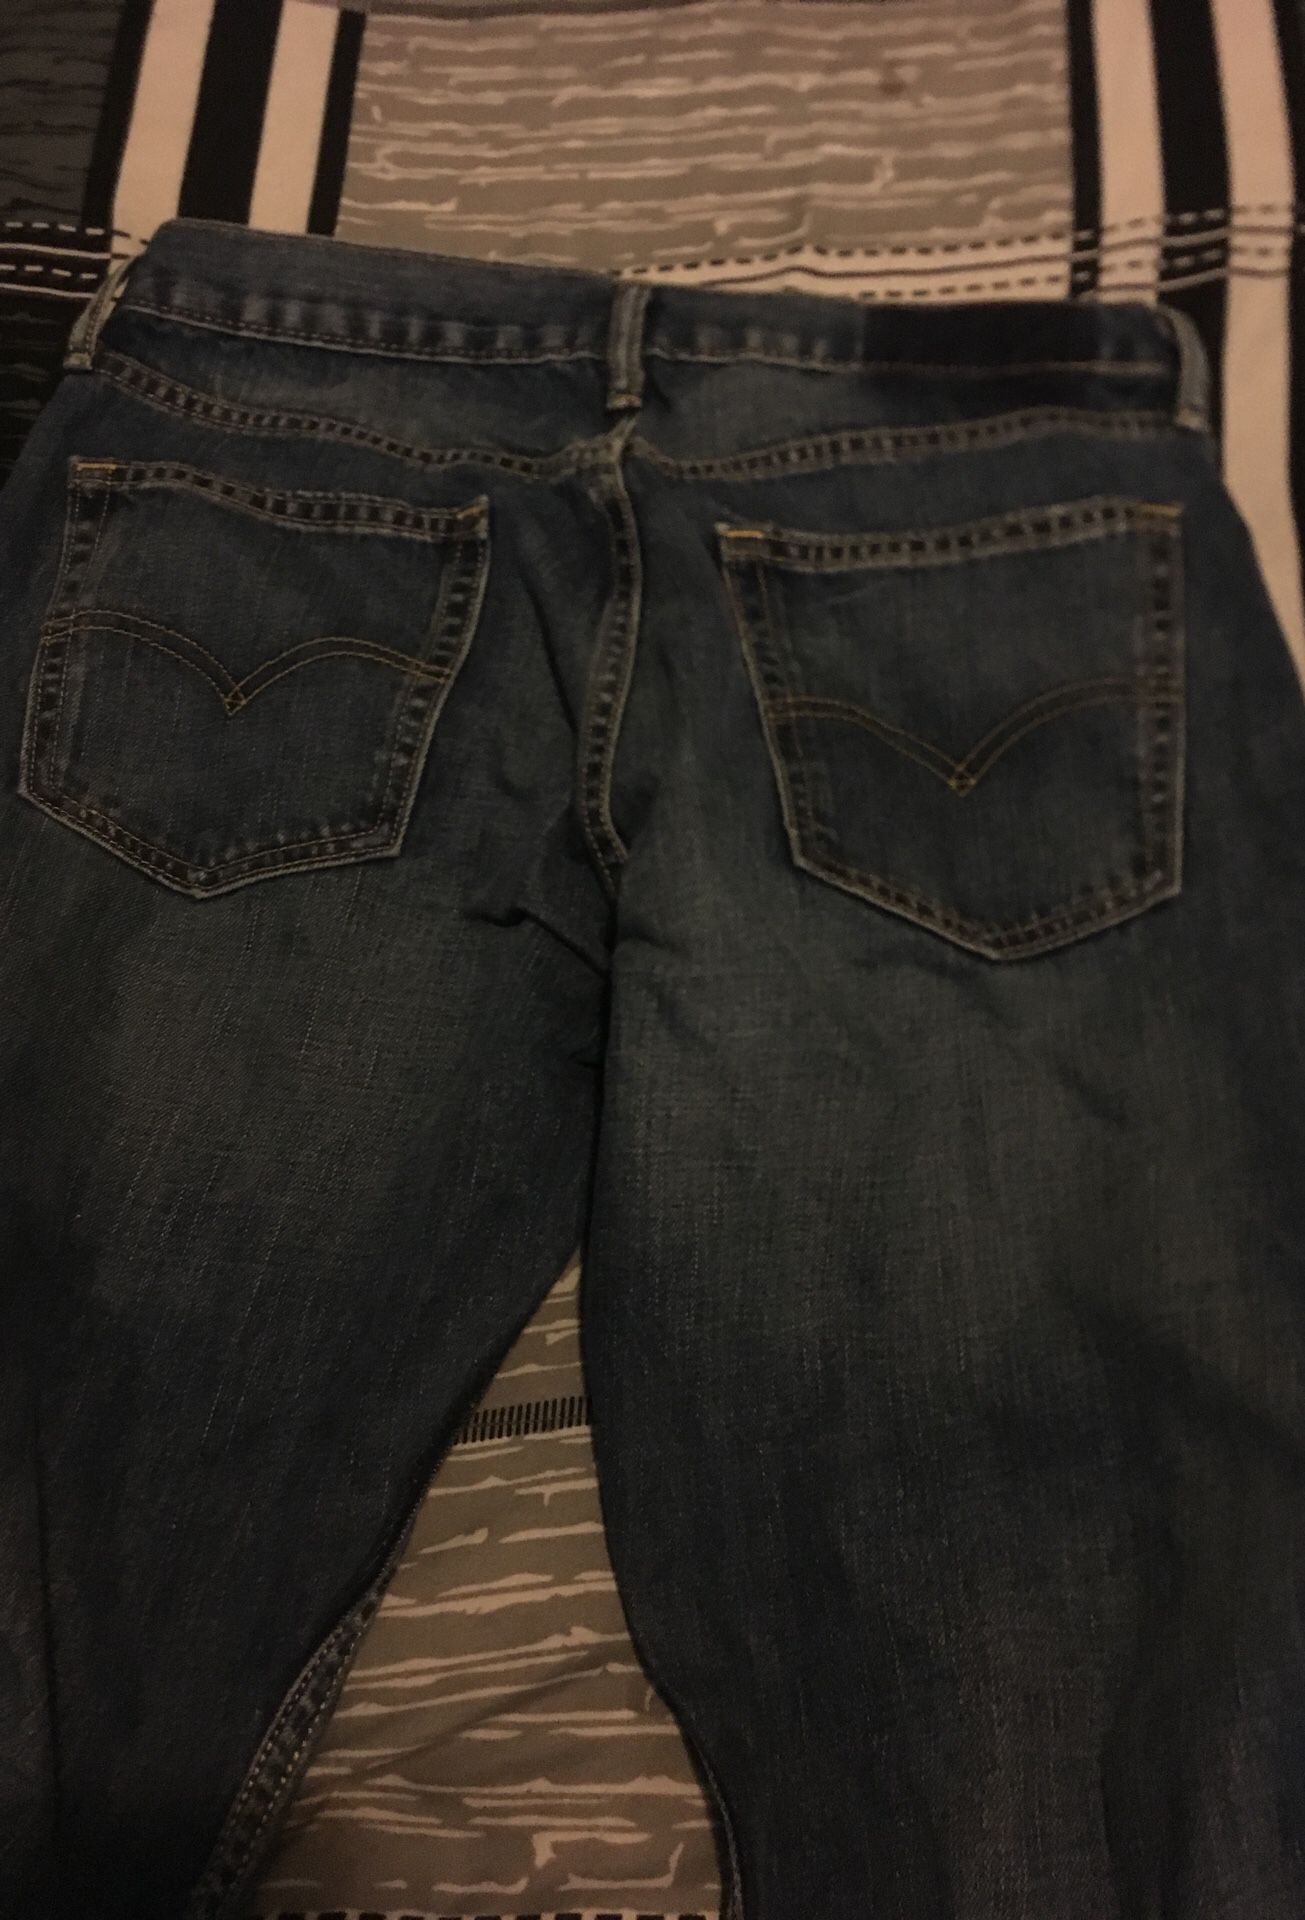 New Levi’s jeans